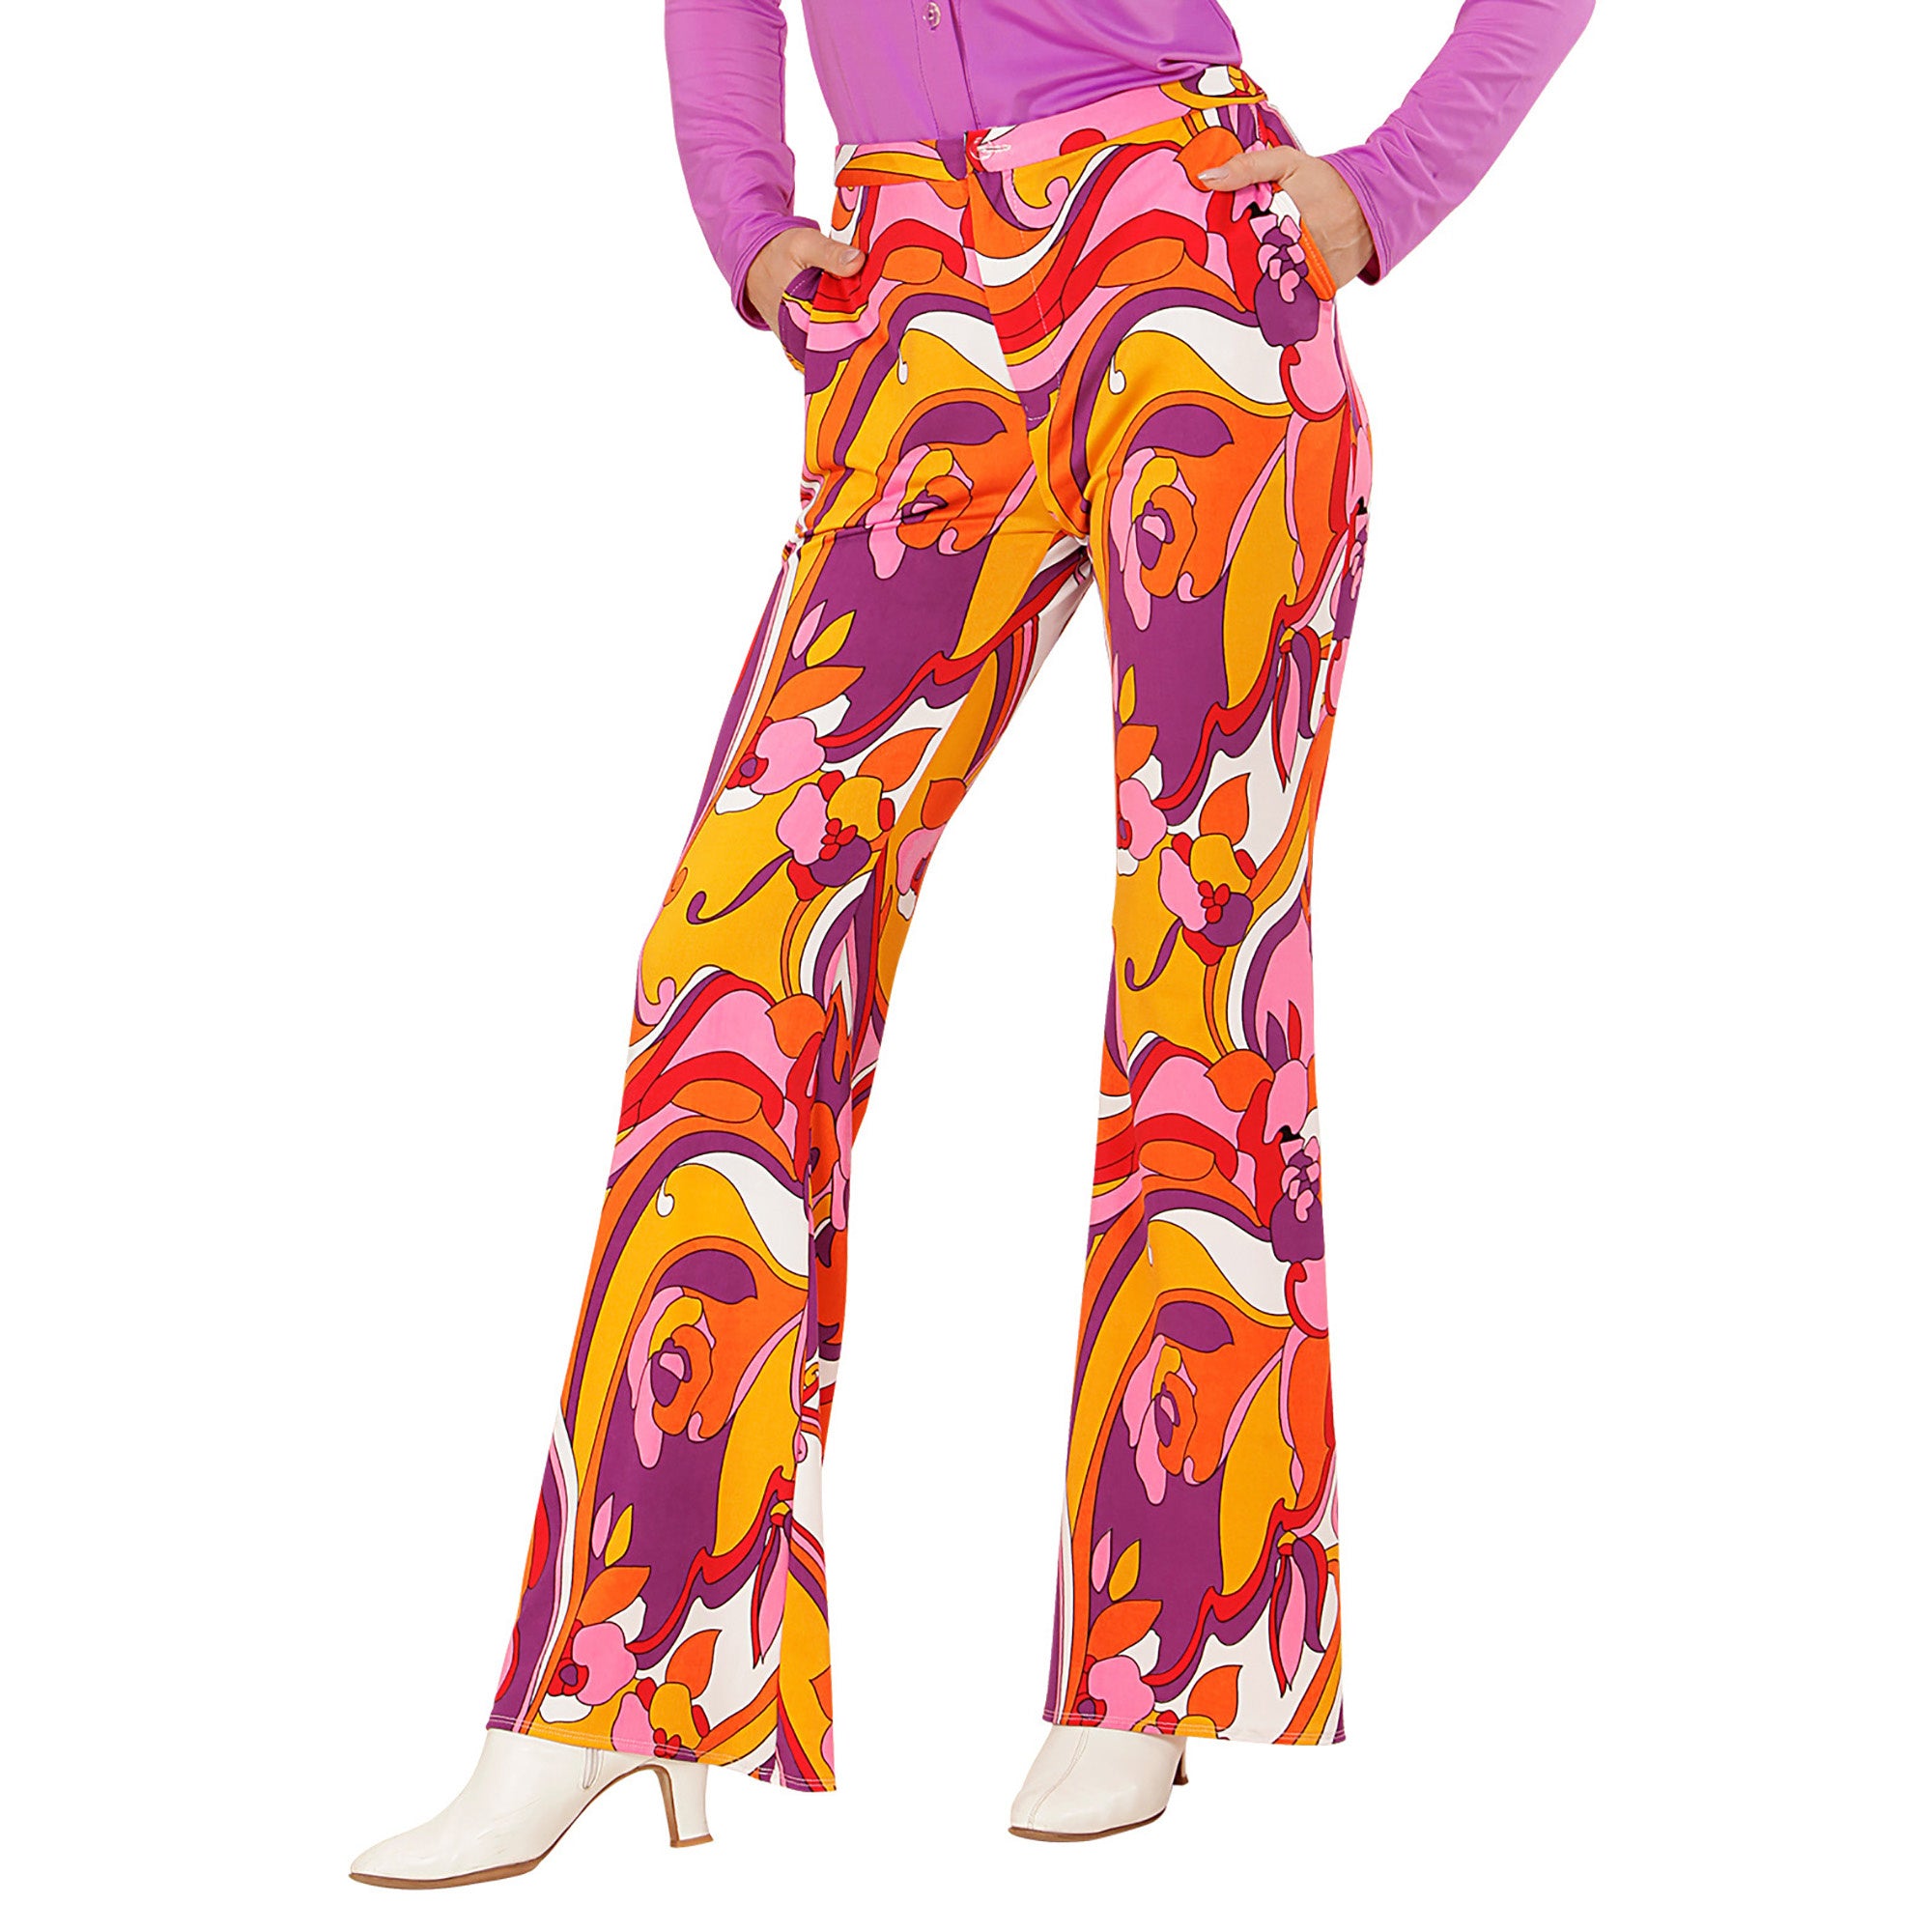 Widmann - Hippie Kostuum - Groovy Gwendolyn 70s Dames Broek, Orchidee Vrouw - Oranje, Roze, Multicolor - Large / XL - Carnavalskleding - Verkleedkleding